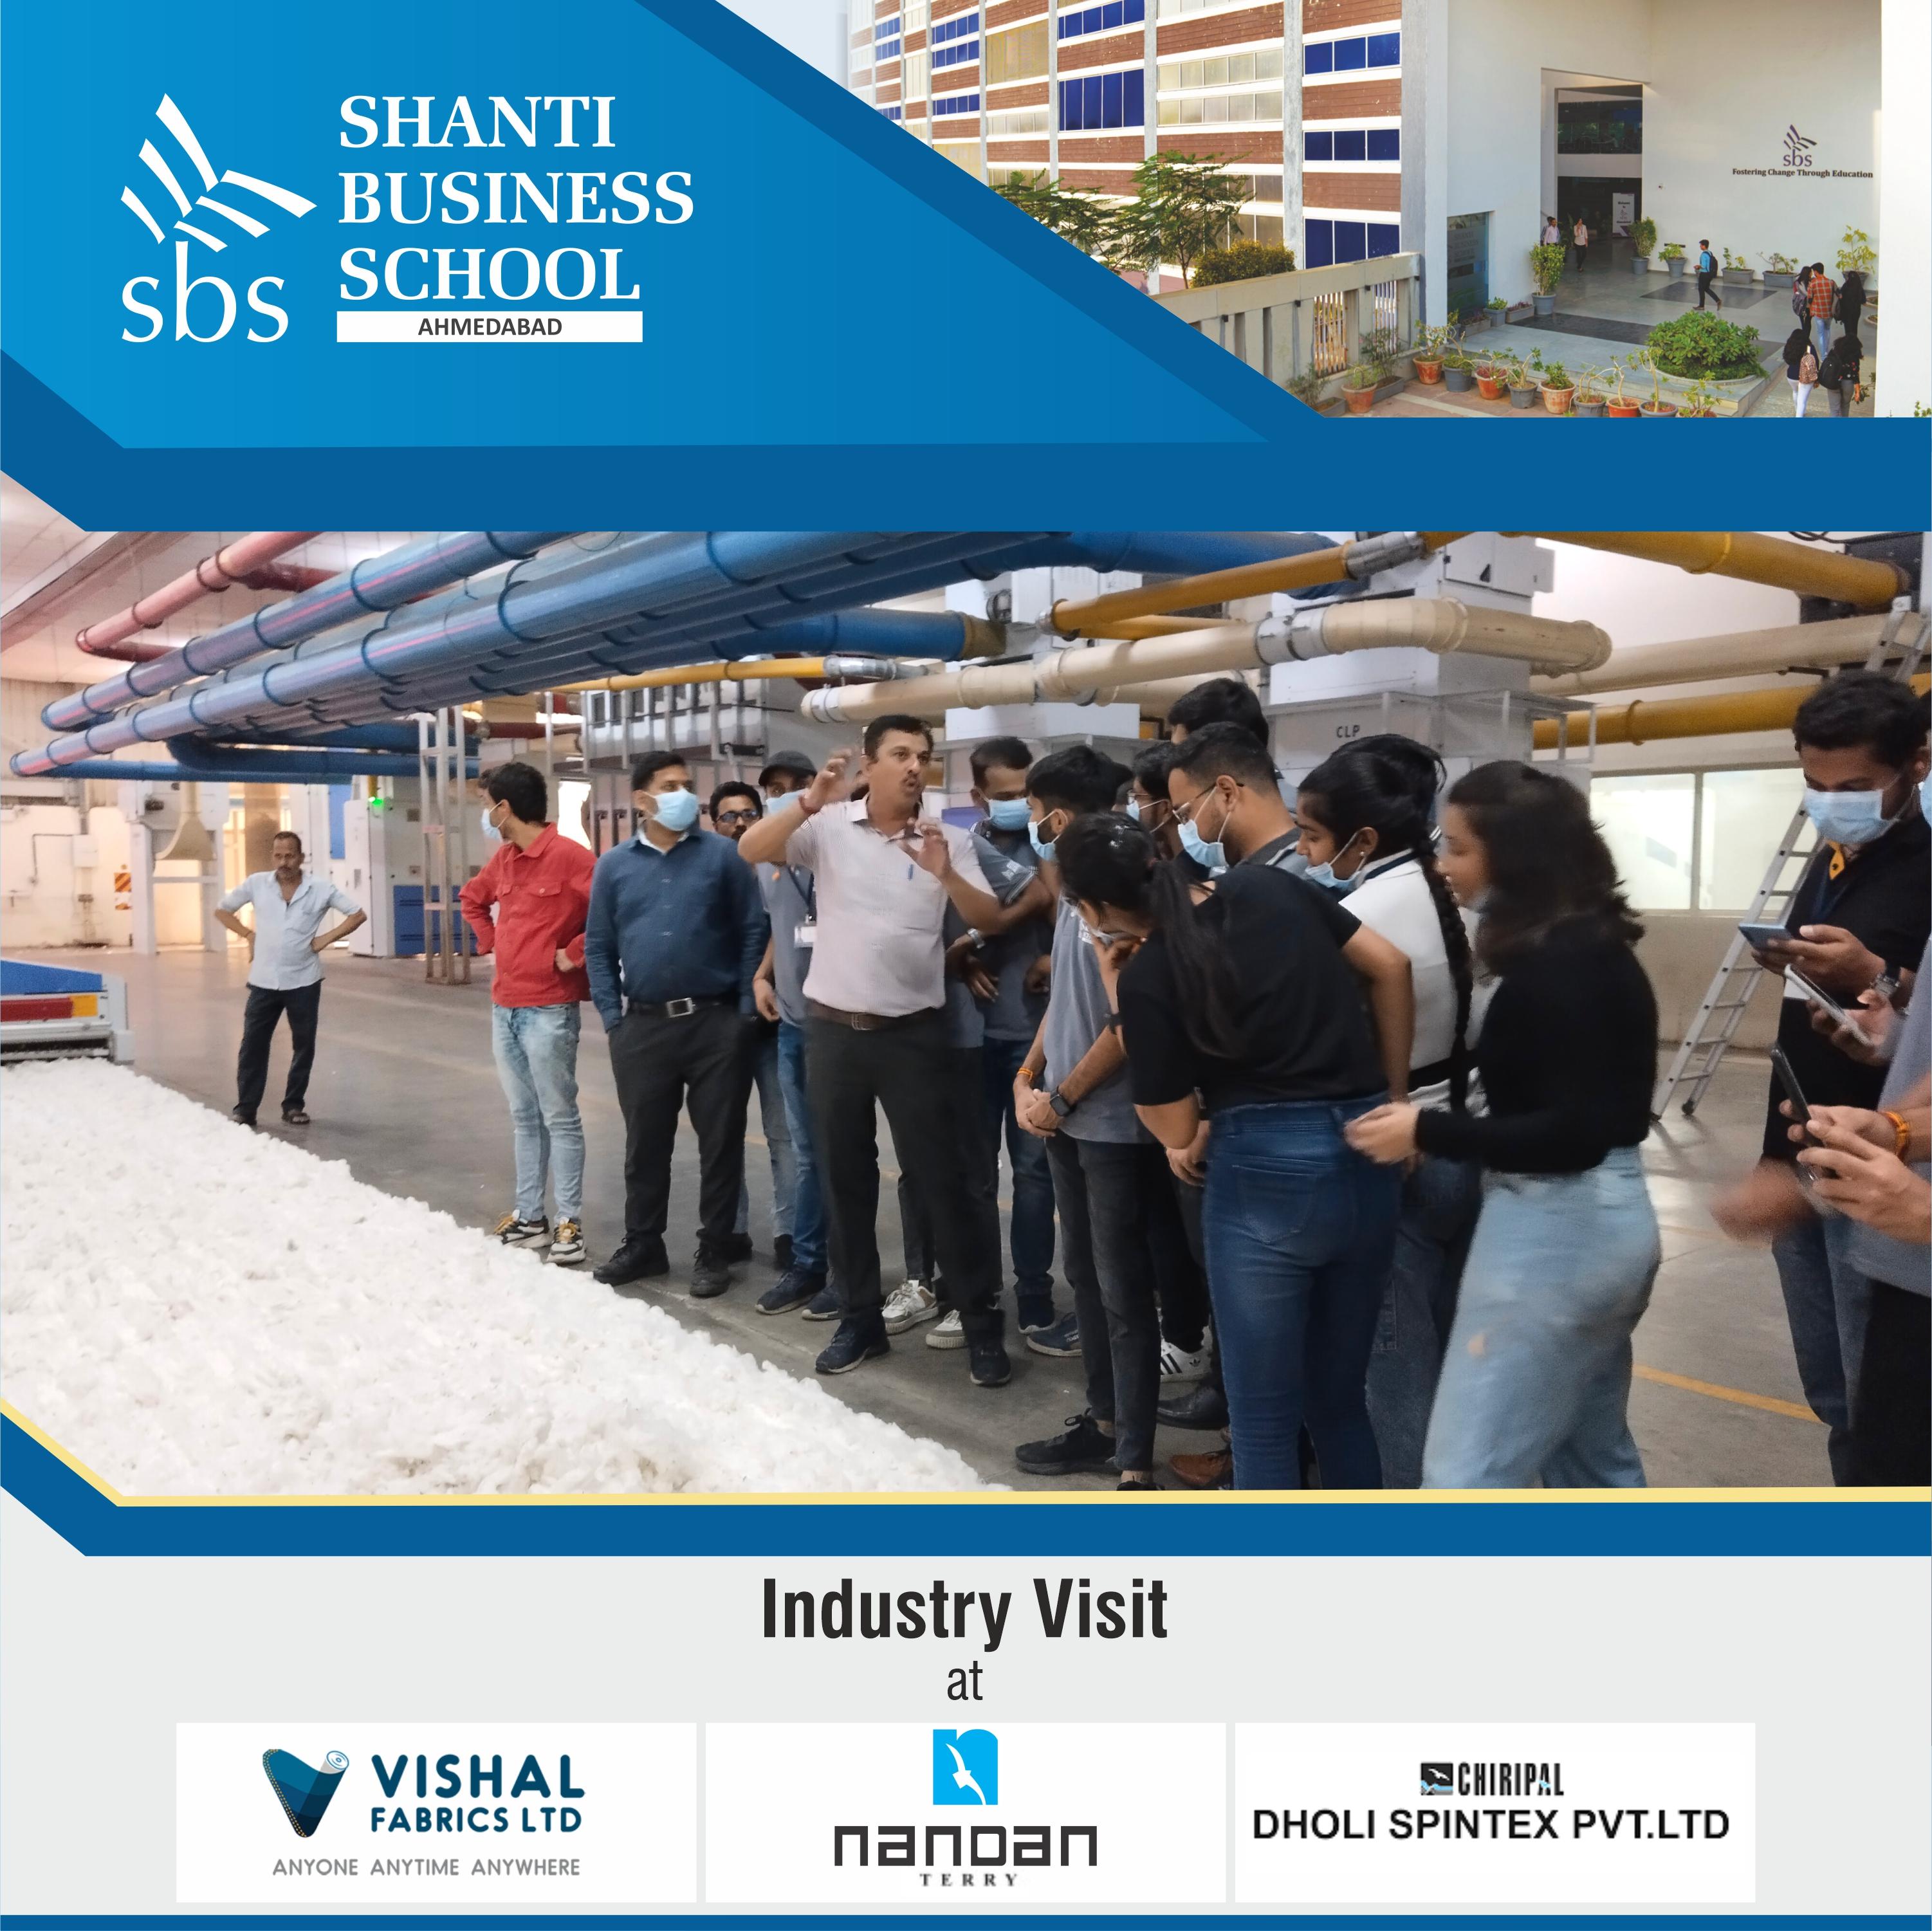 Industrial Visit - Vishal Fabrics, Nandan Terri & Dholi Spintex Pvt. Ltd.